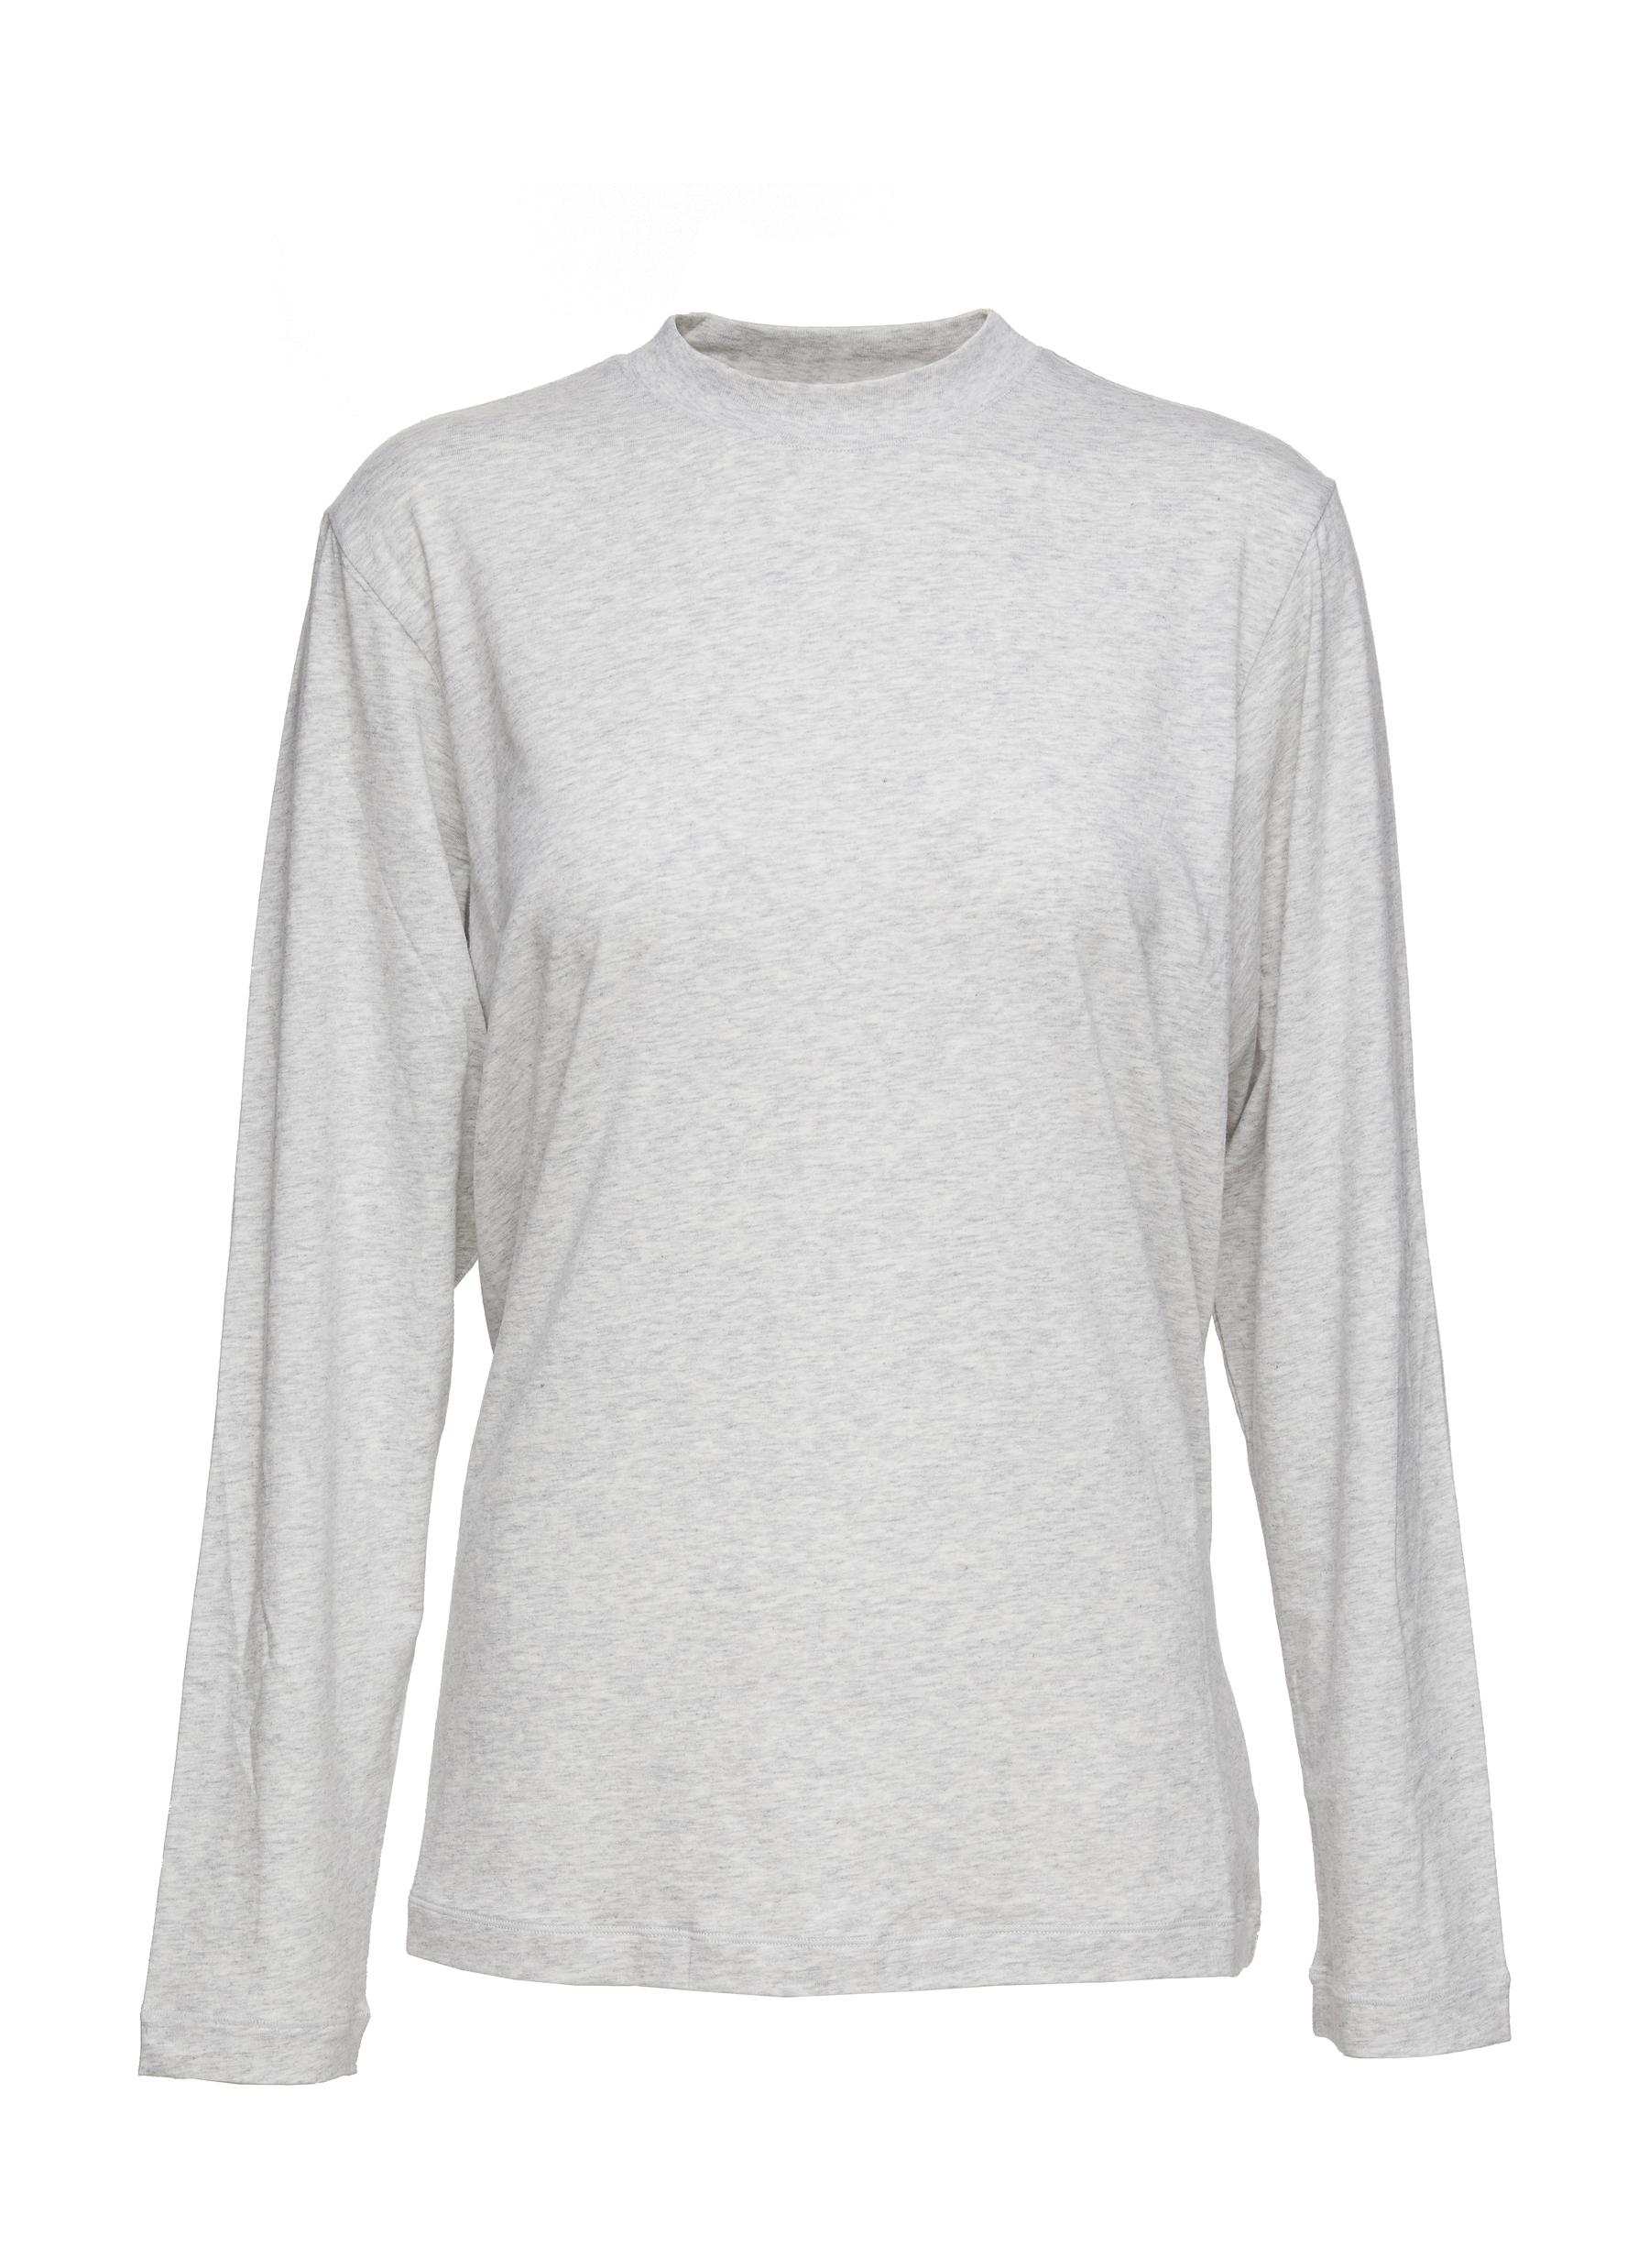 Skims Long Sleeve T-shirt in Gray